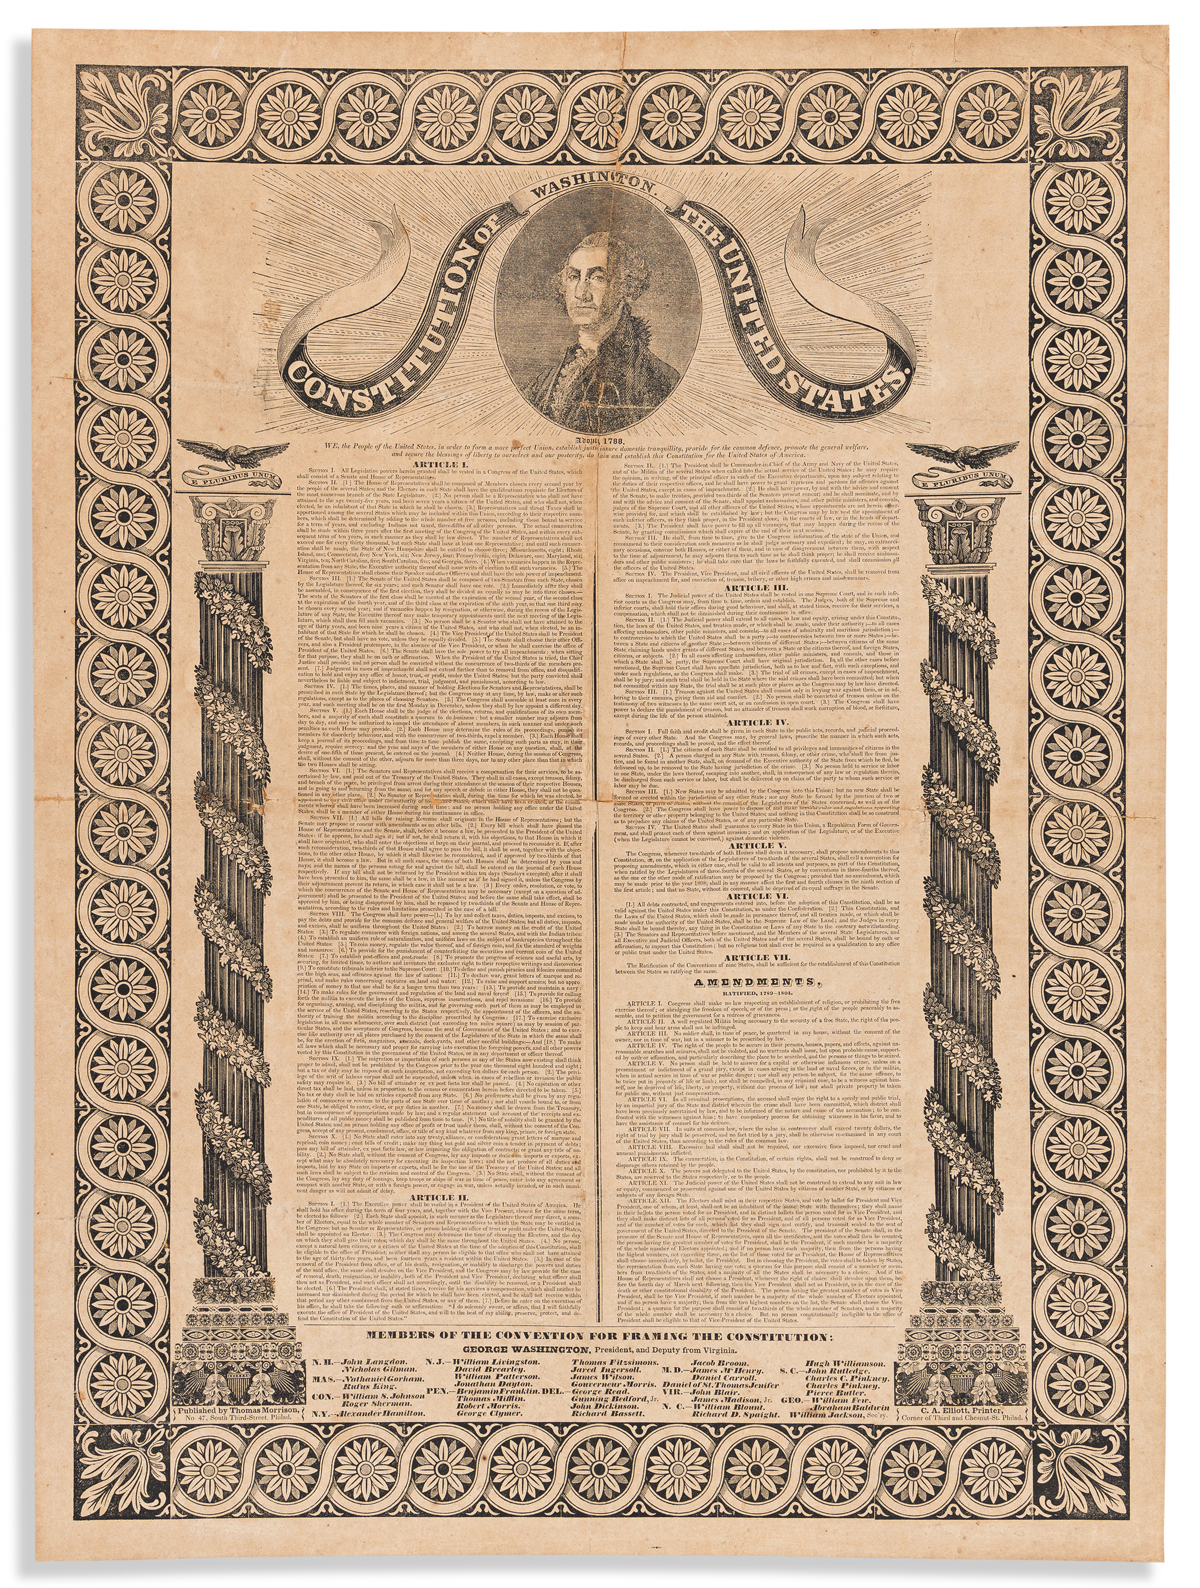 (WASHINGTON.) Constitution of the United States.